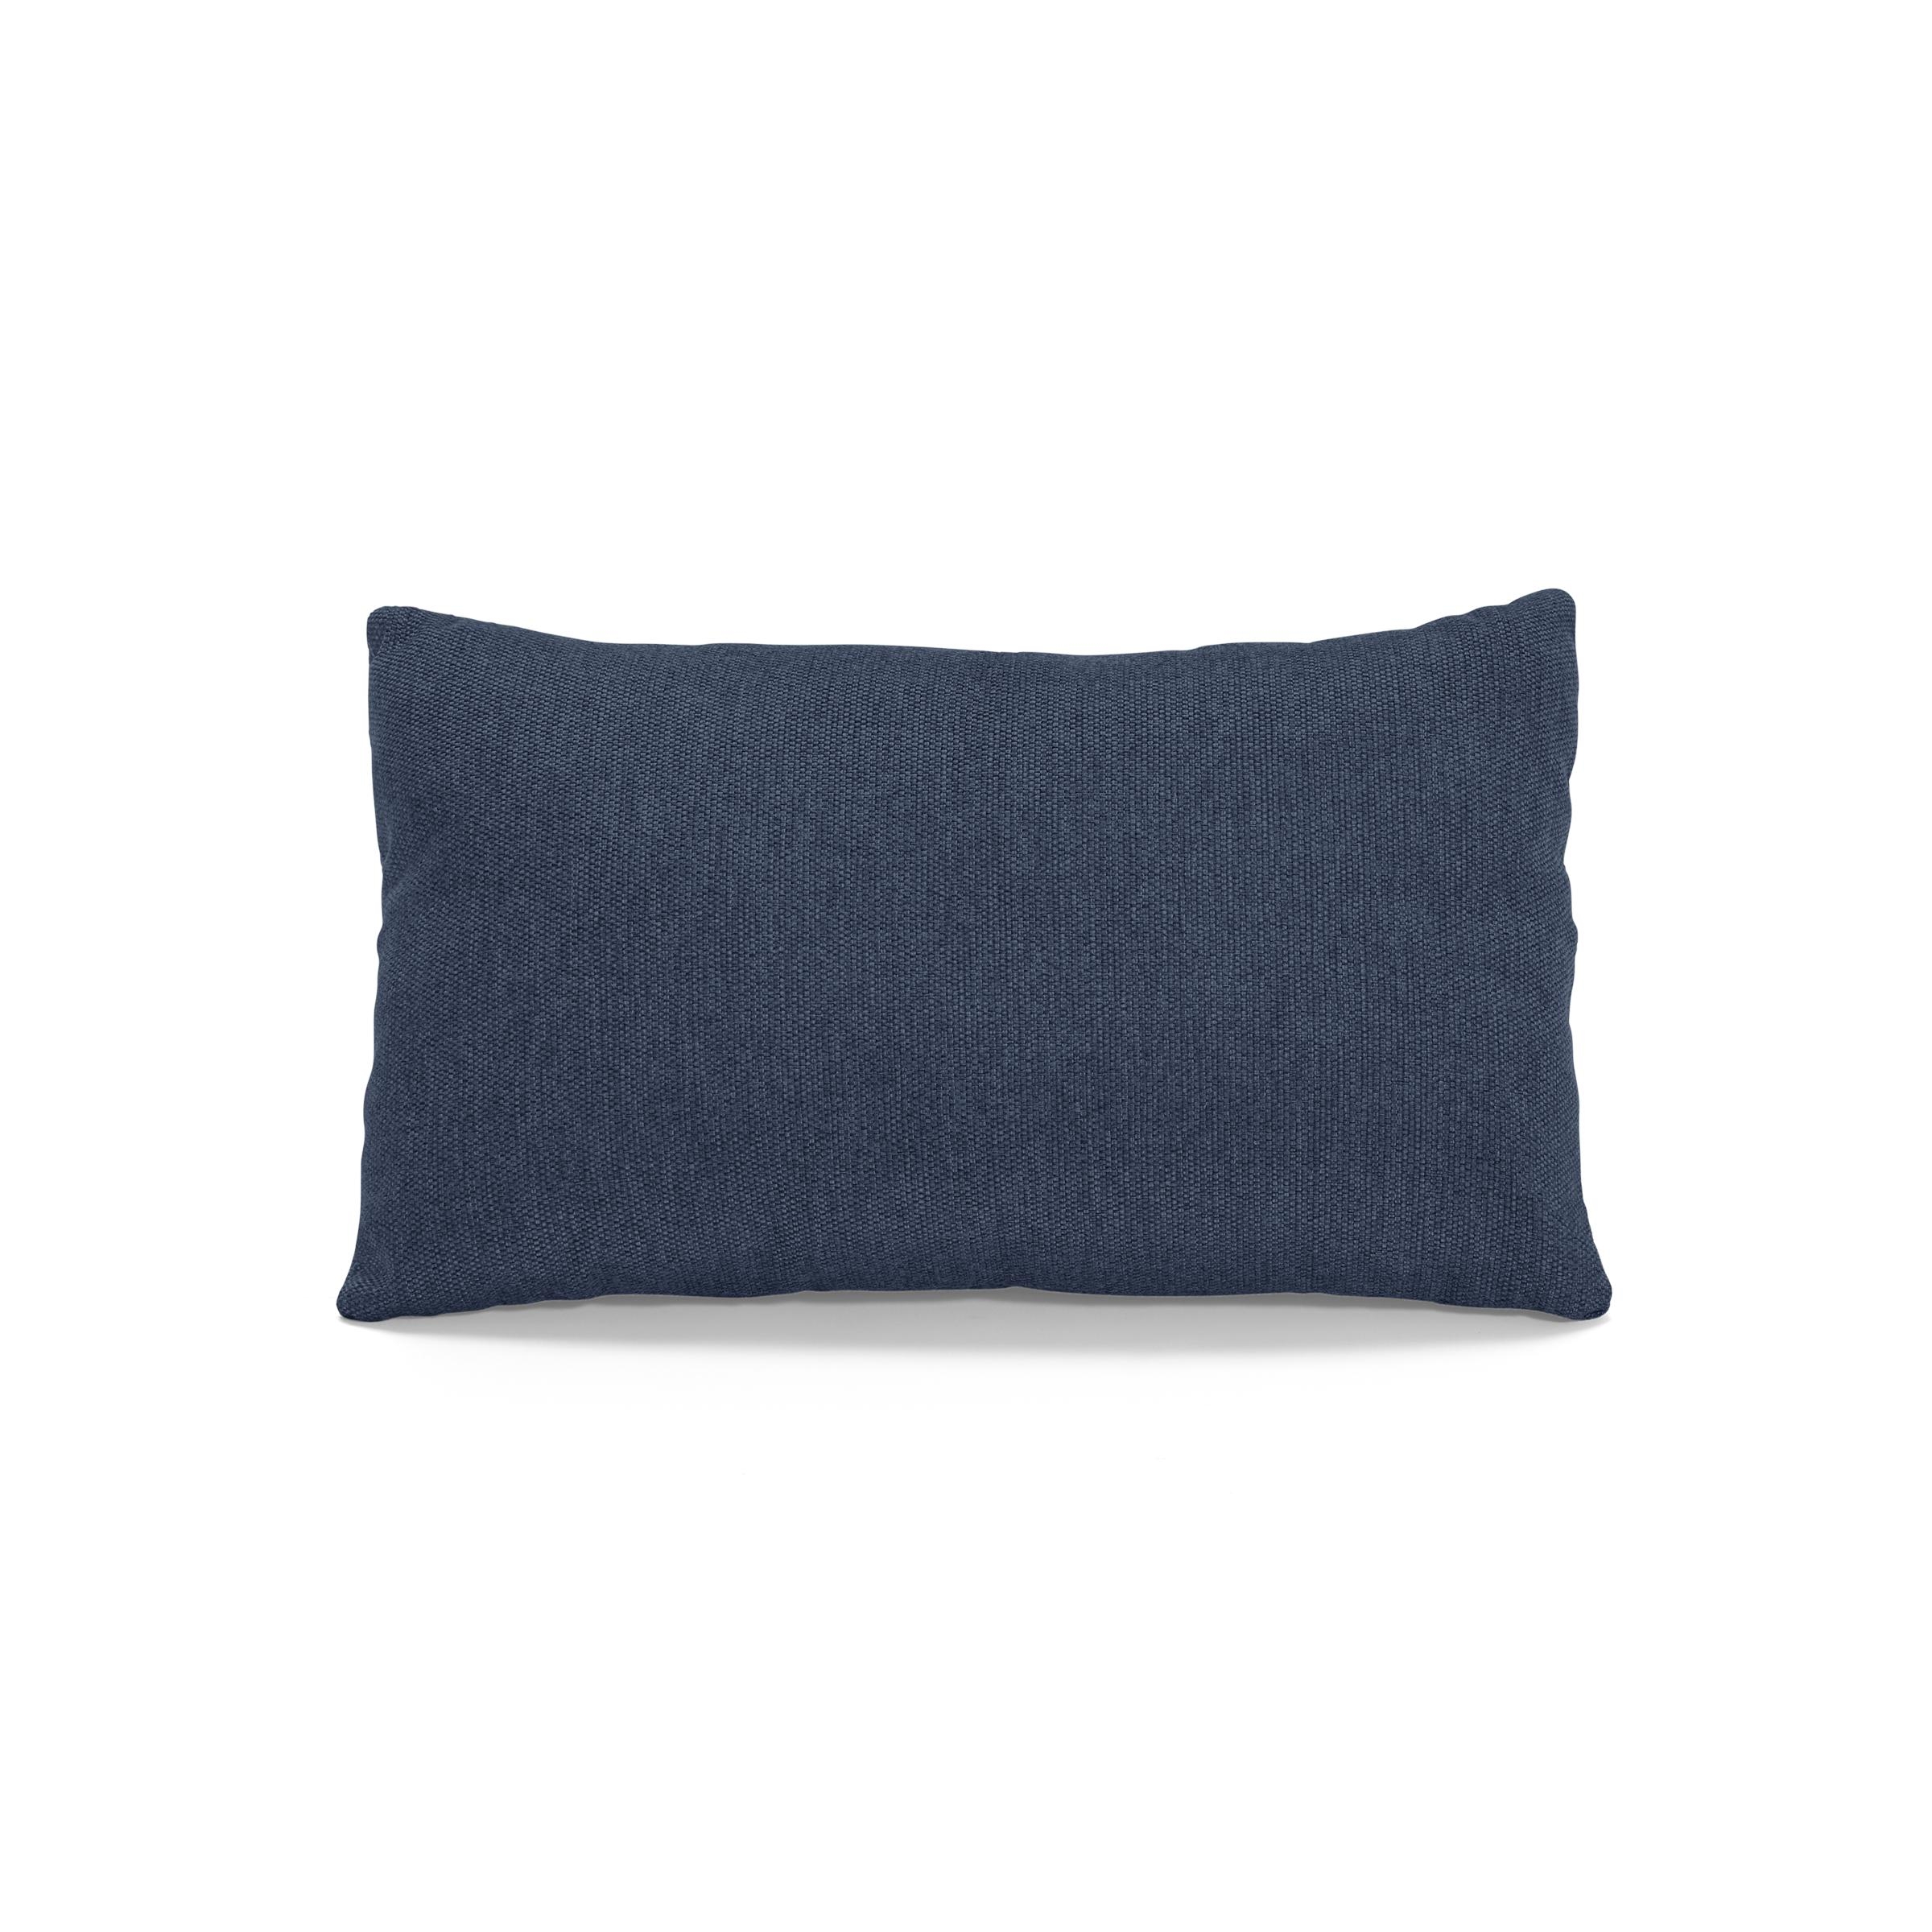 Nomad Lumbar Pillow in Navy Blue - Image 0